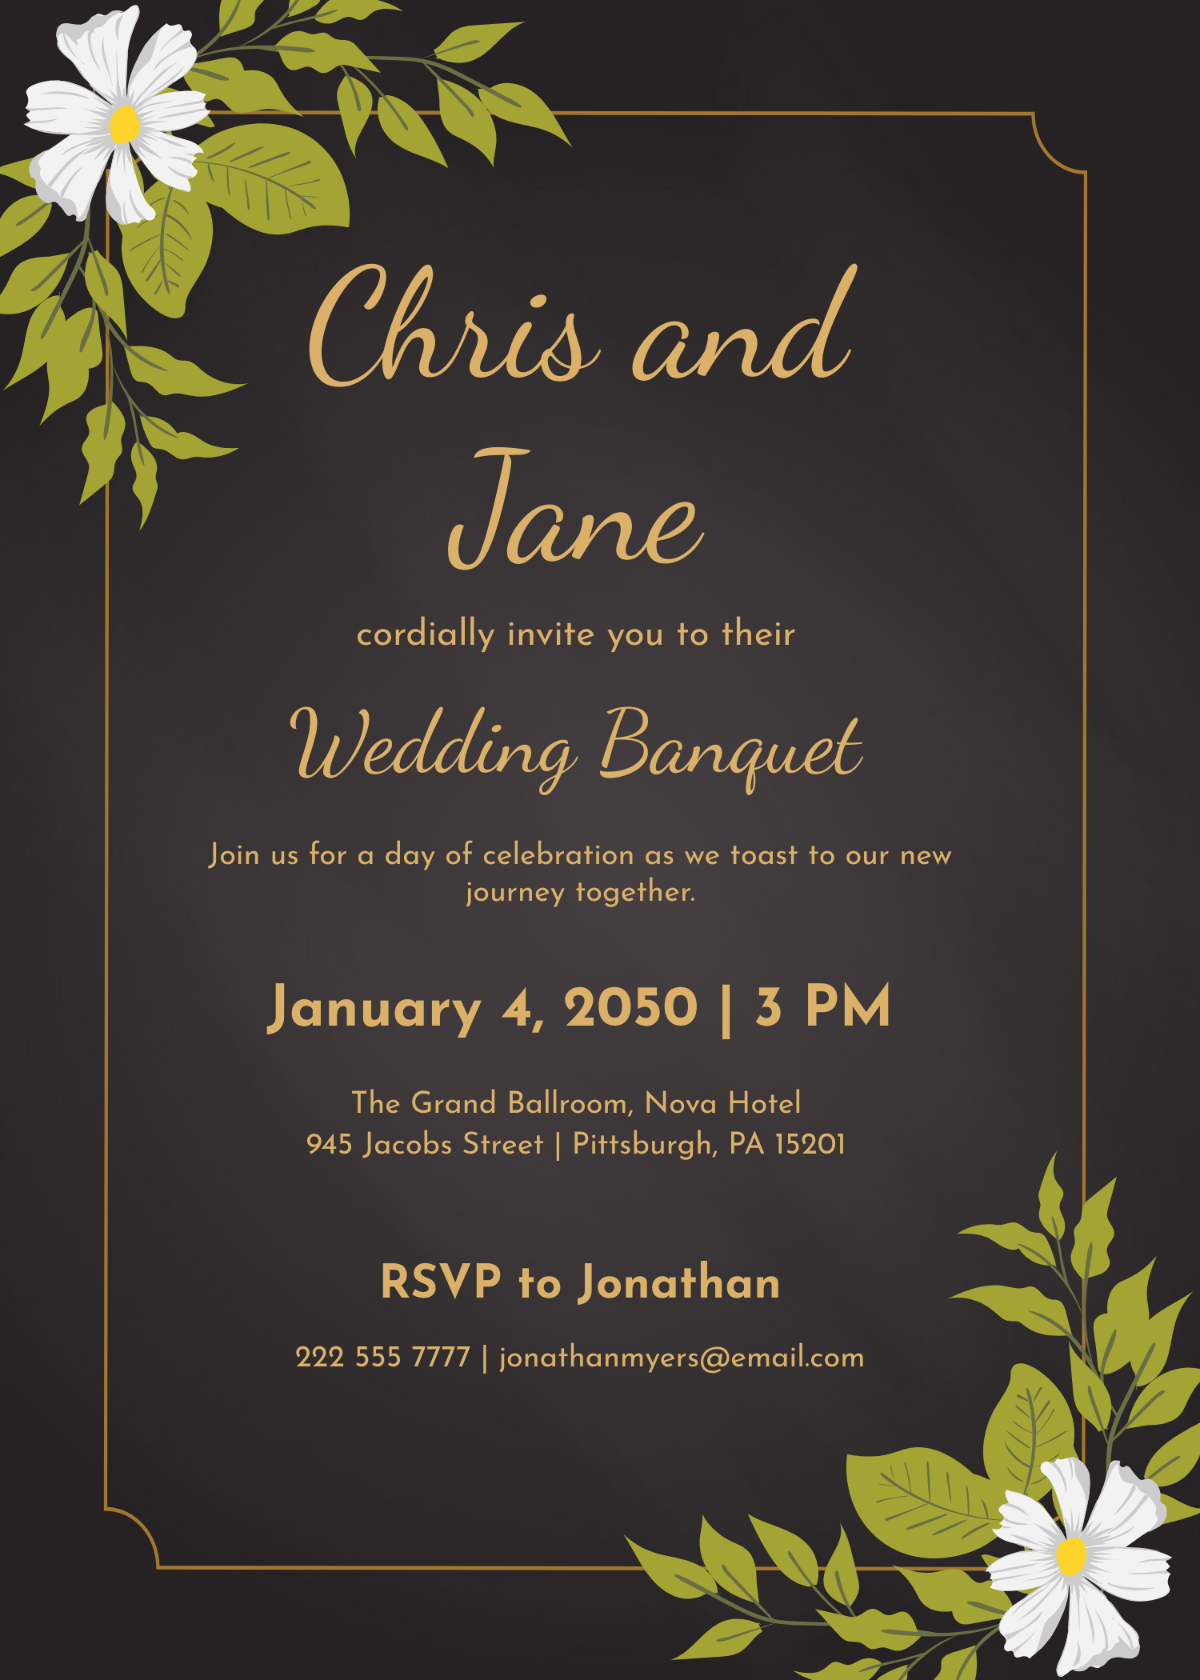 Wedding Banquet Invitation